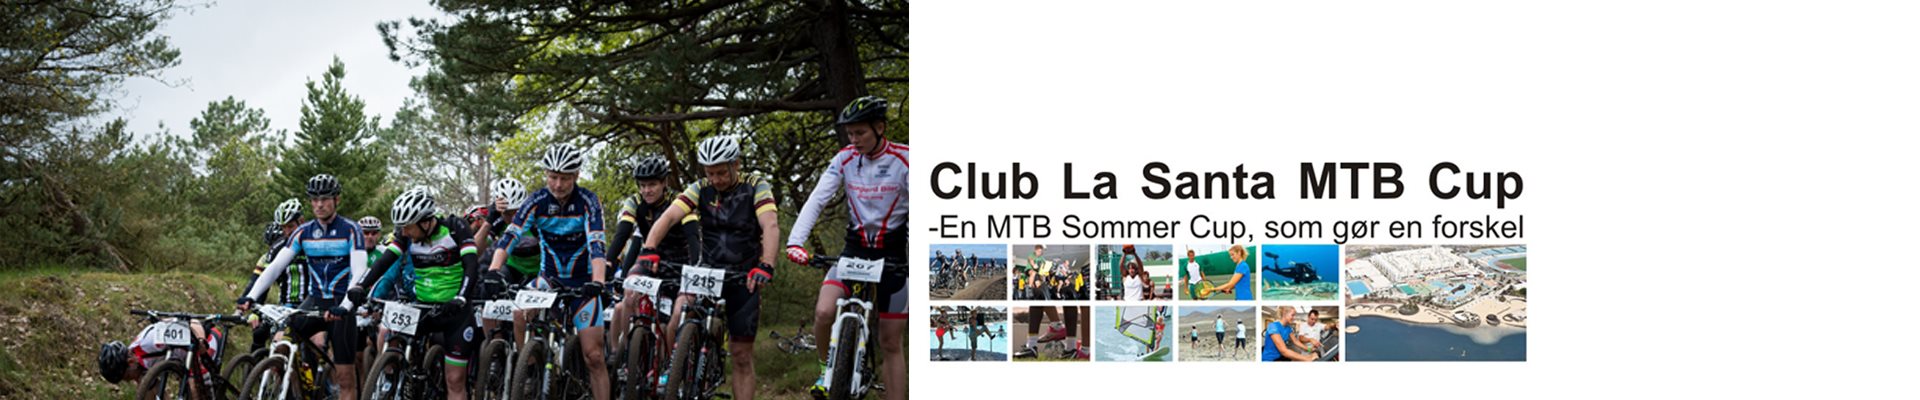 CLUB LA SANTA MTB CUP '18 - #2 Tjæreborg MTB Track